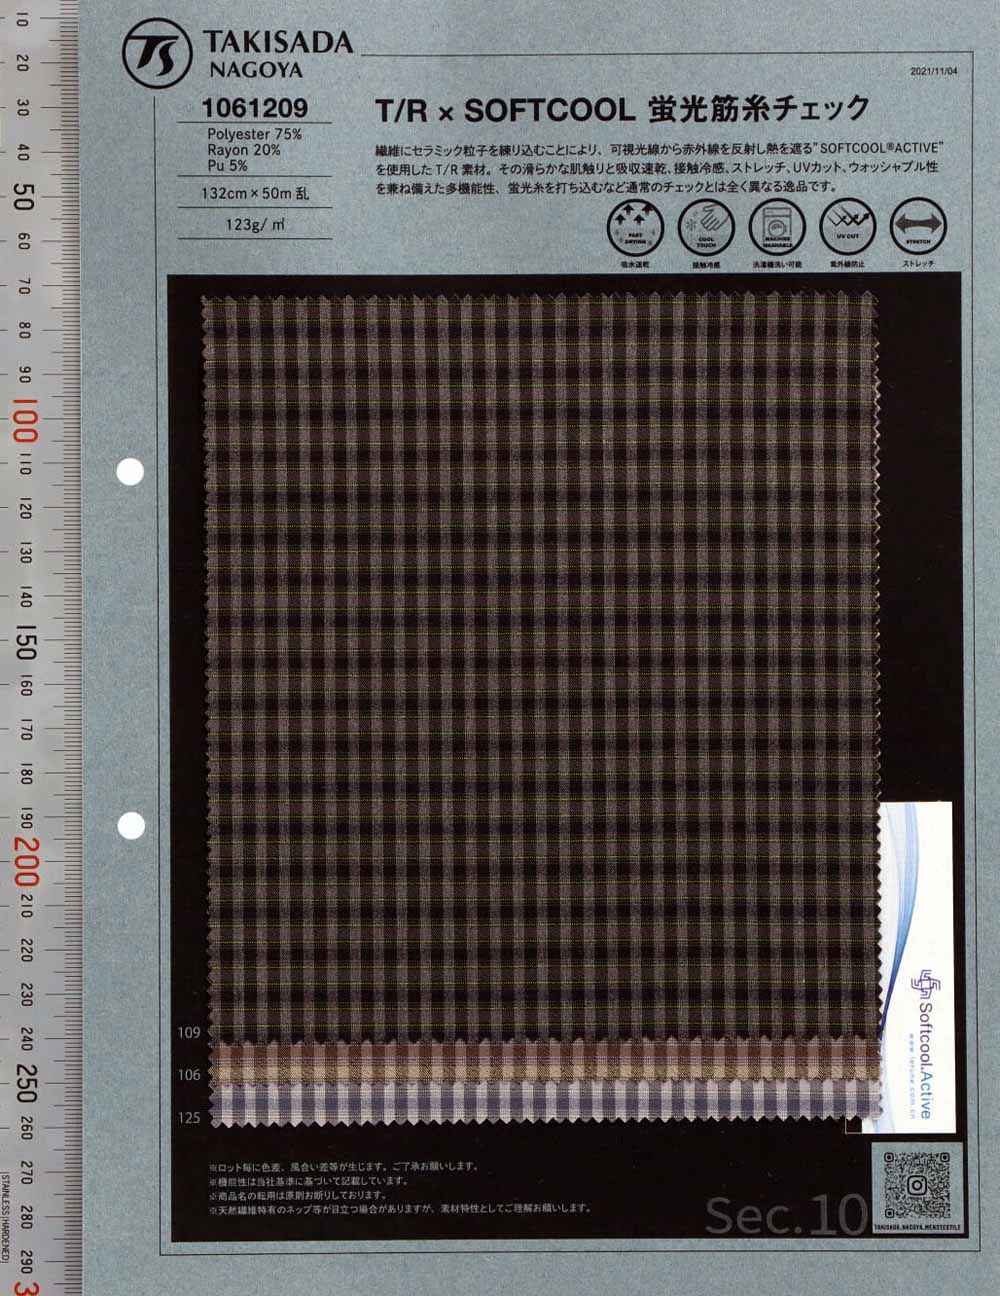 1061209 Comprobación De Hilo Fluorescente T / R × SOFTCOOL[Fabrica Textil] Takisada Nagoya